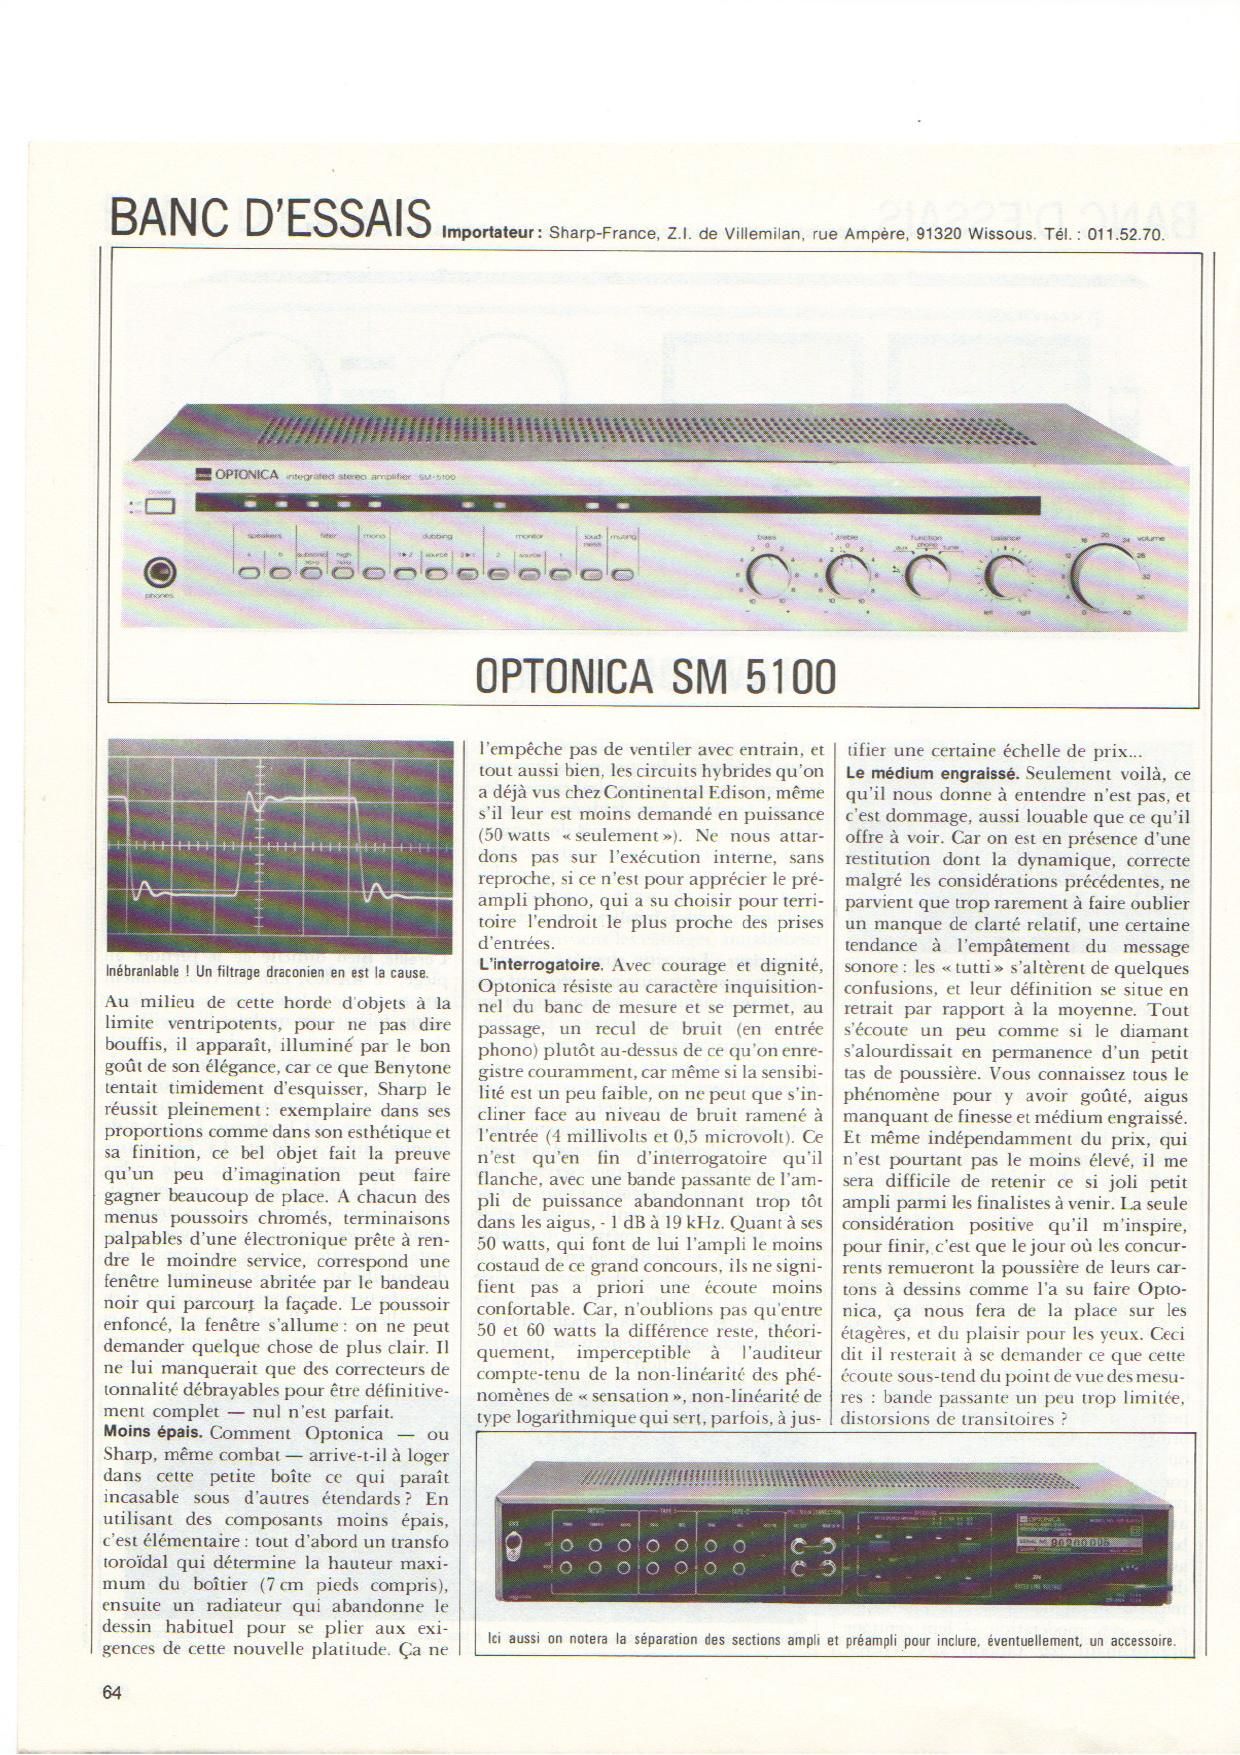 Optonica SM 5100 Test